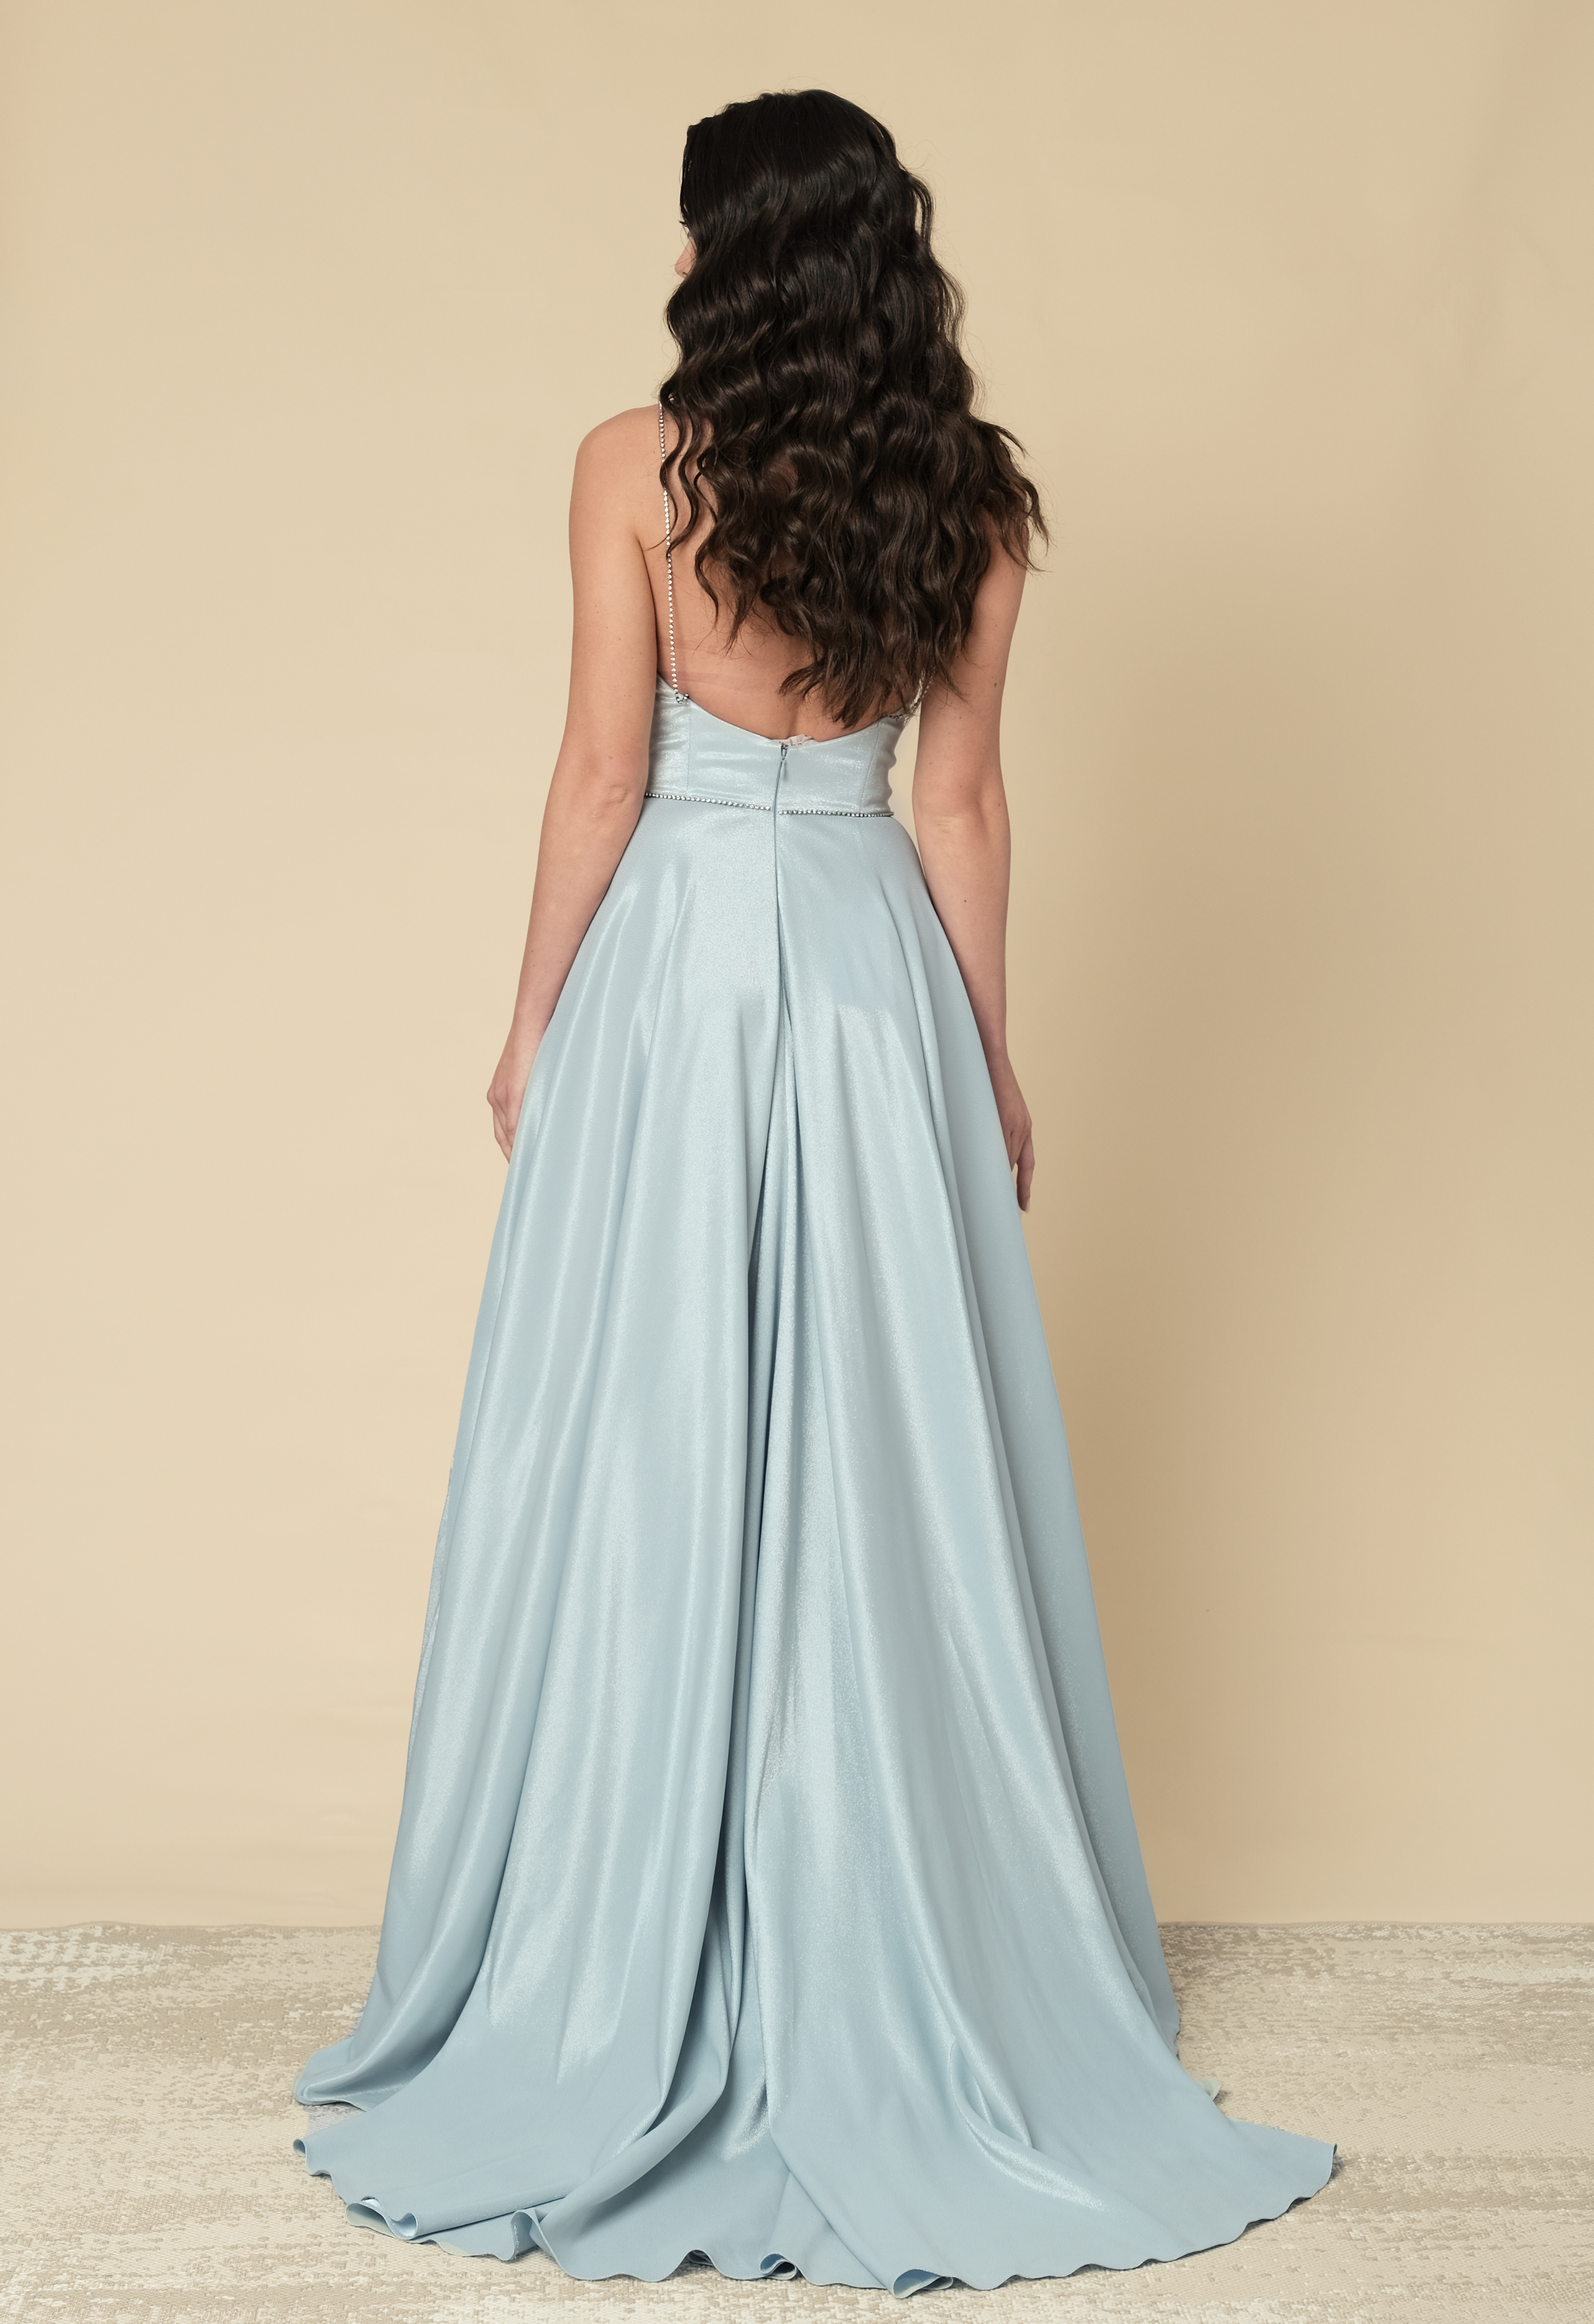 Metallic blue gown